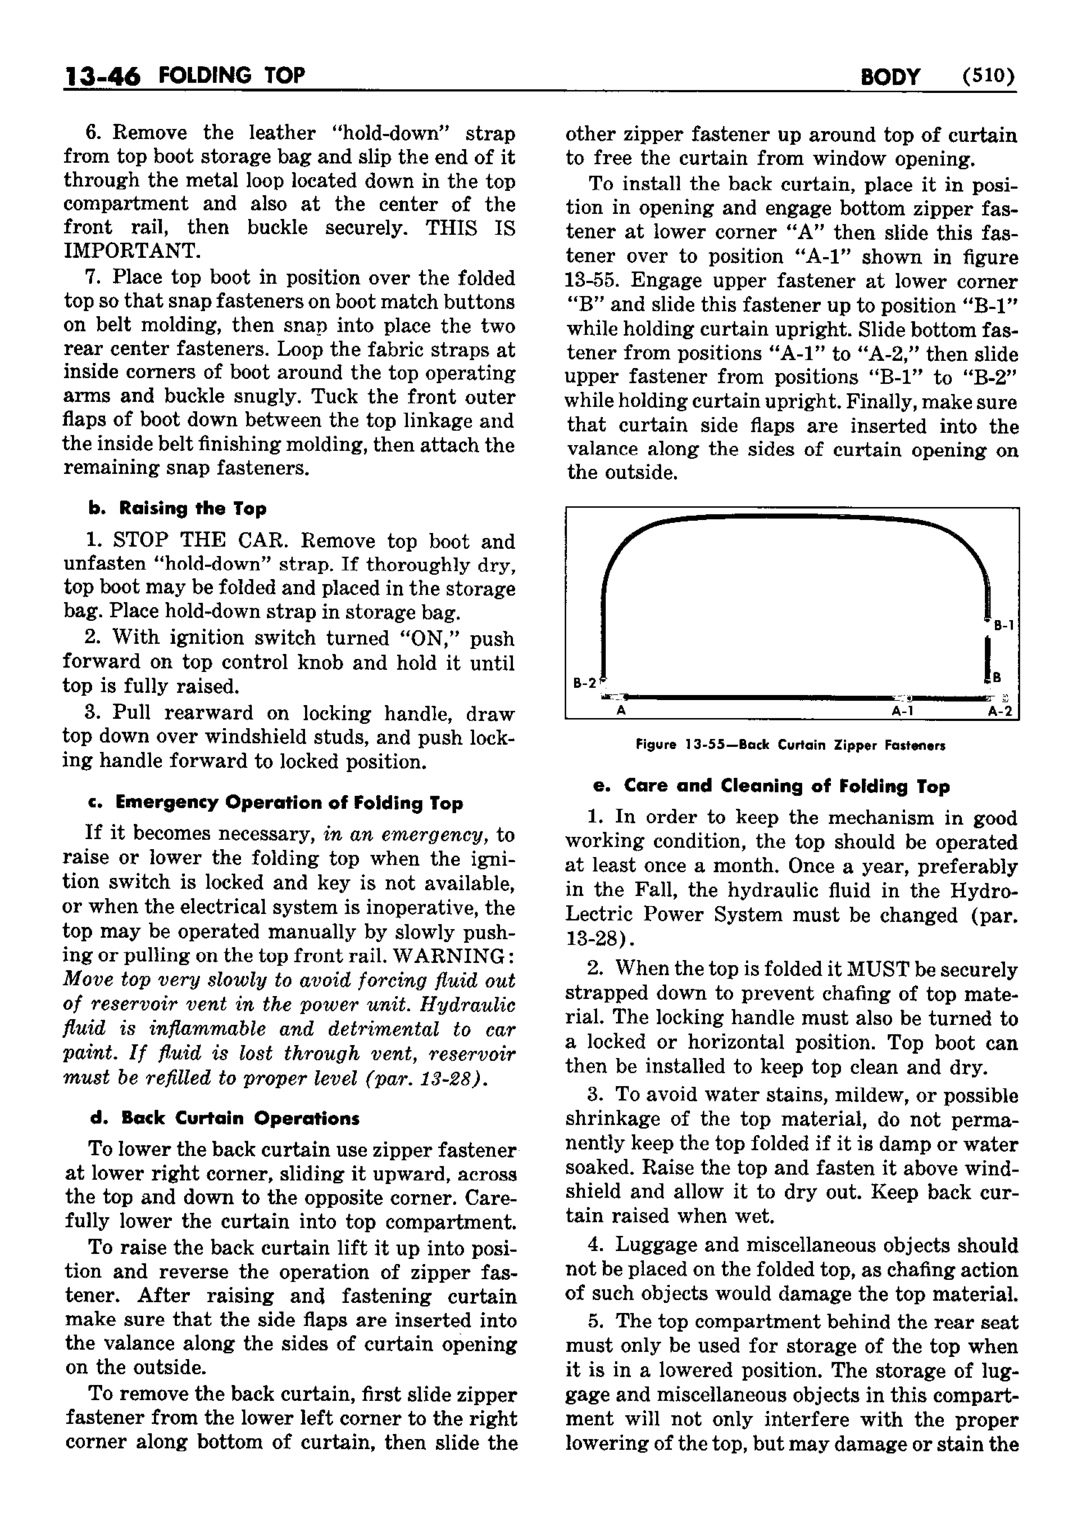 n_14 1952 Buick Shop Manual - Body-046-046.jpg